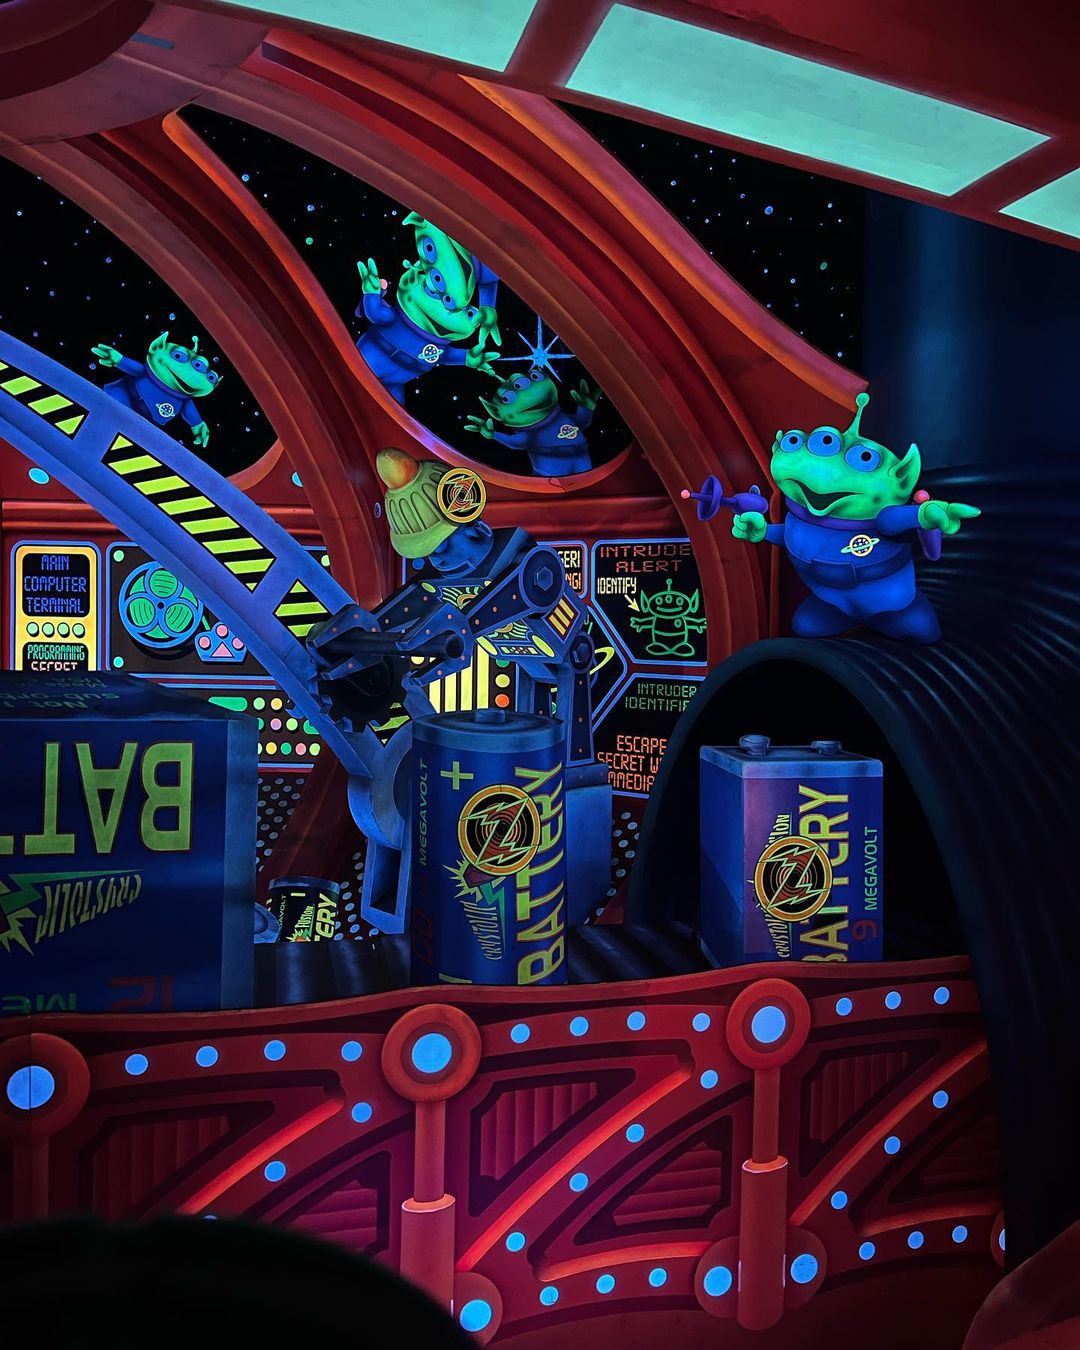 Space Ranger Spin de Buzz Lightyear - Attraction Magic Kingdom 